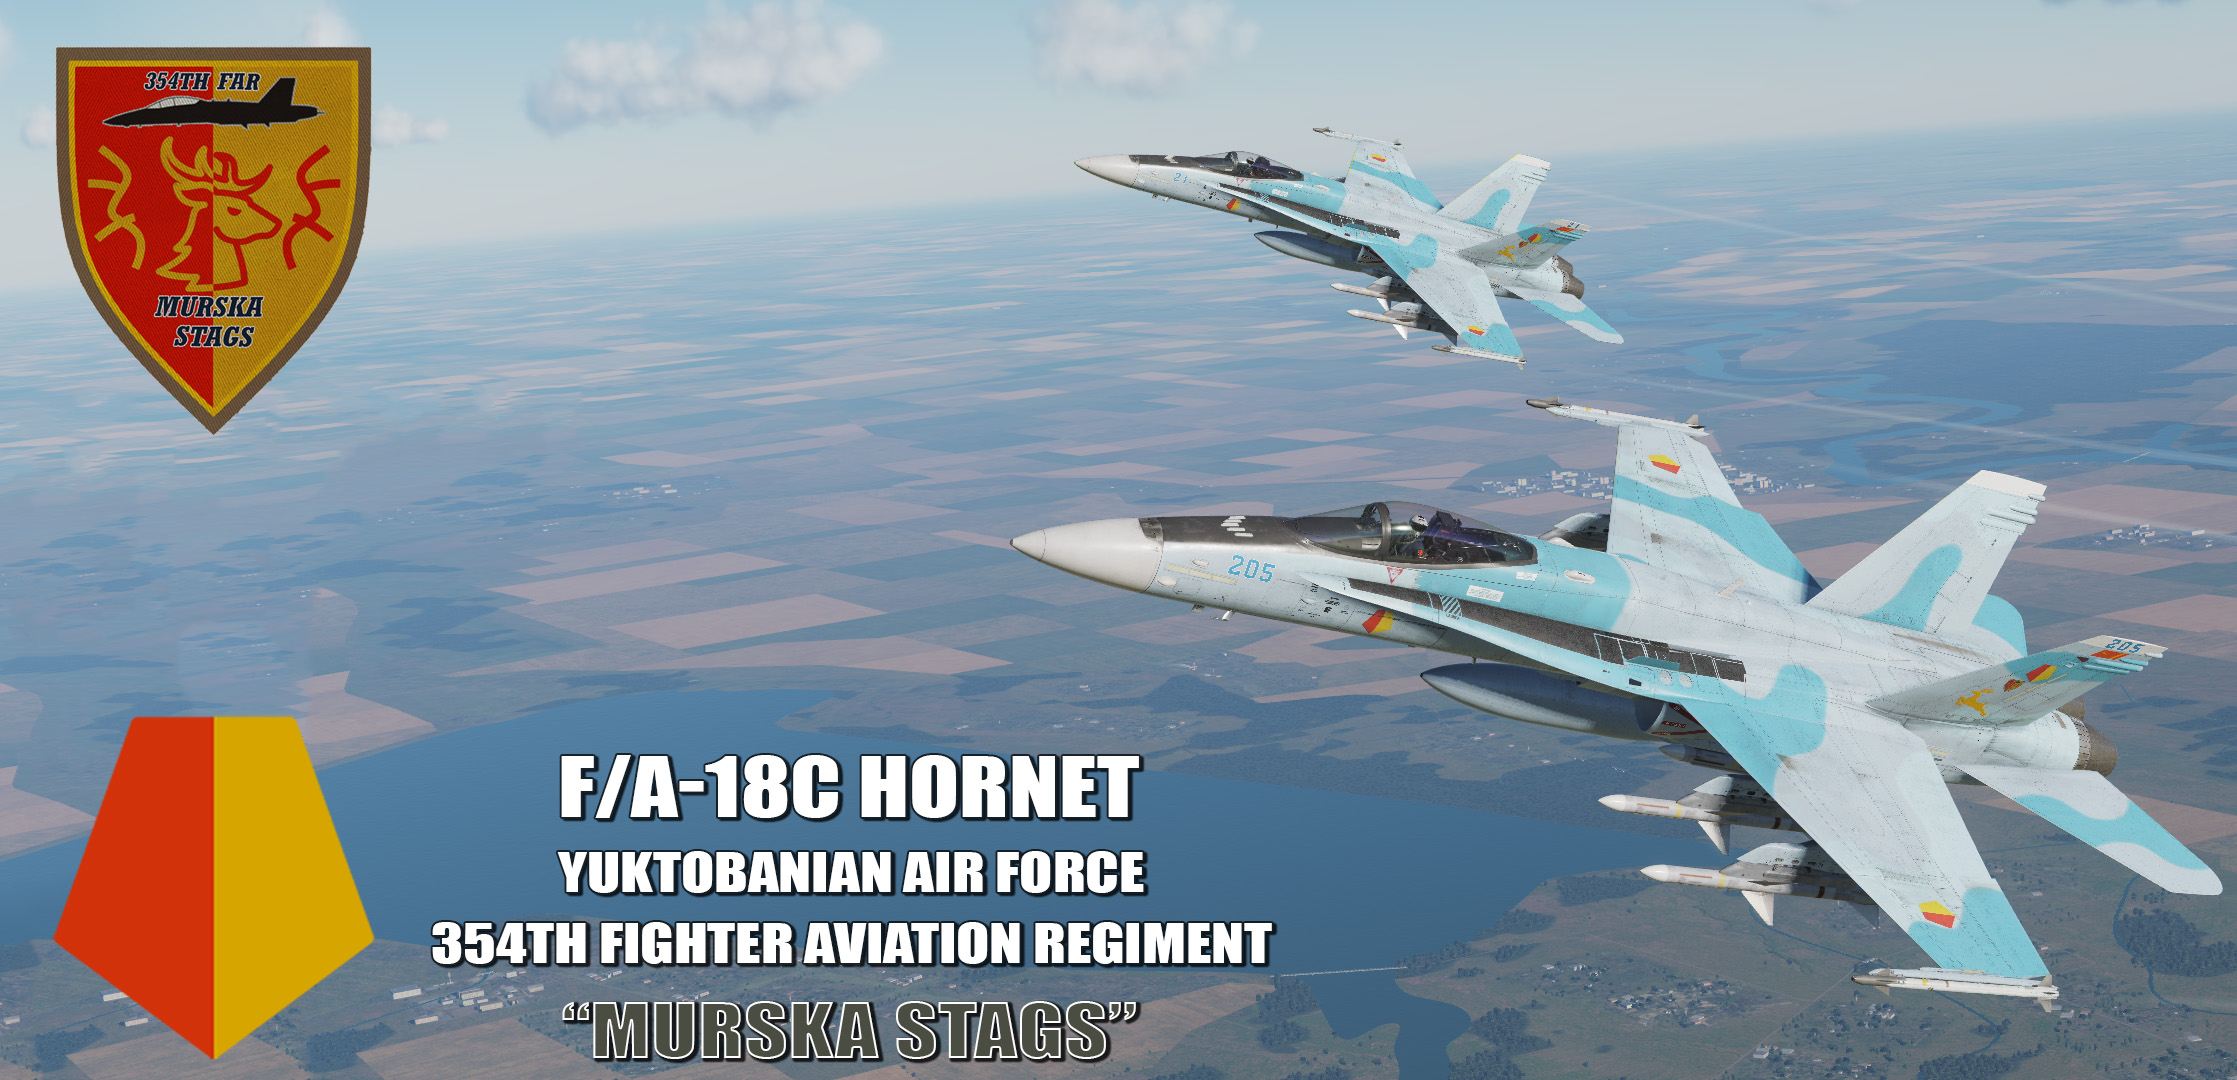 Ace Combat - Yuktobanian Air Force 354th Fighter Aviation Regiment "Murska Stags" F/A-18C Hornet